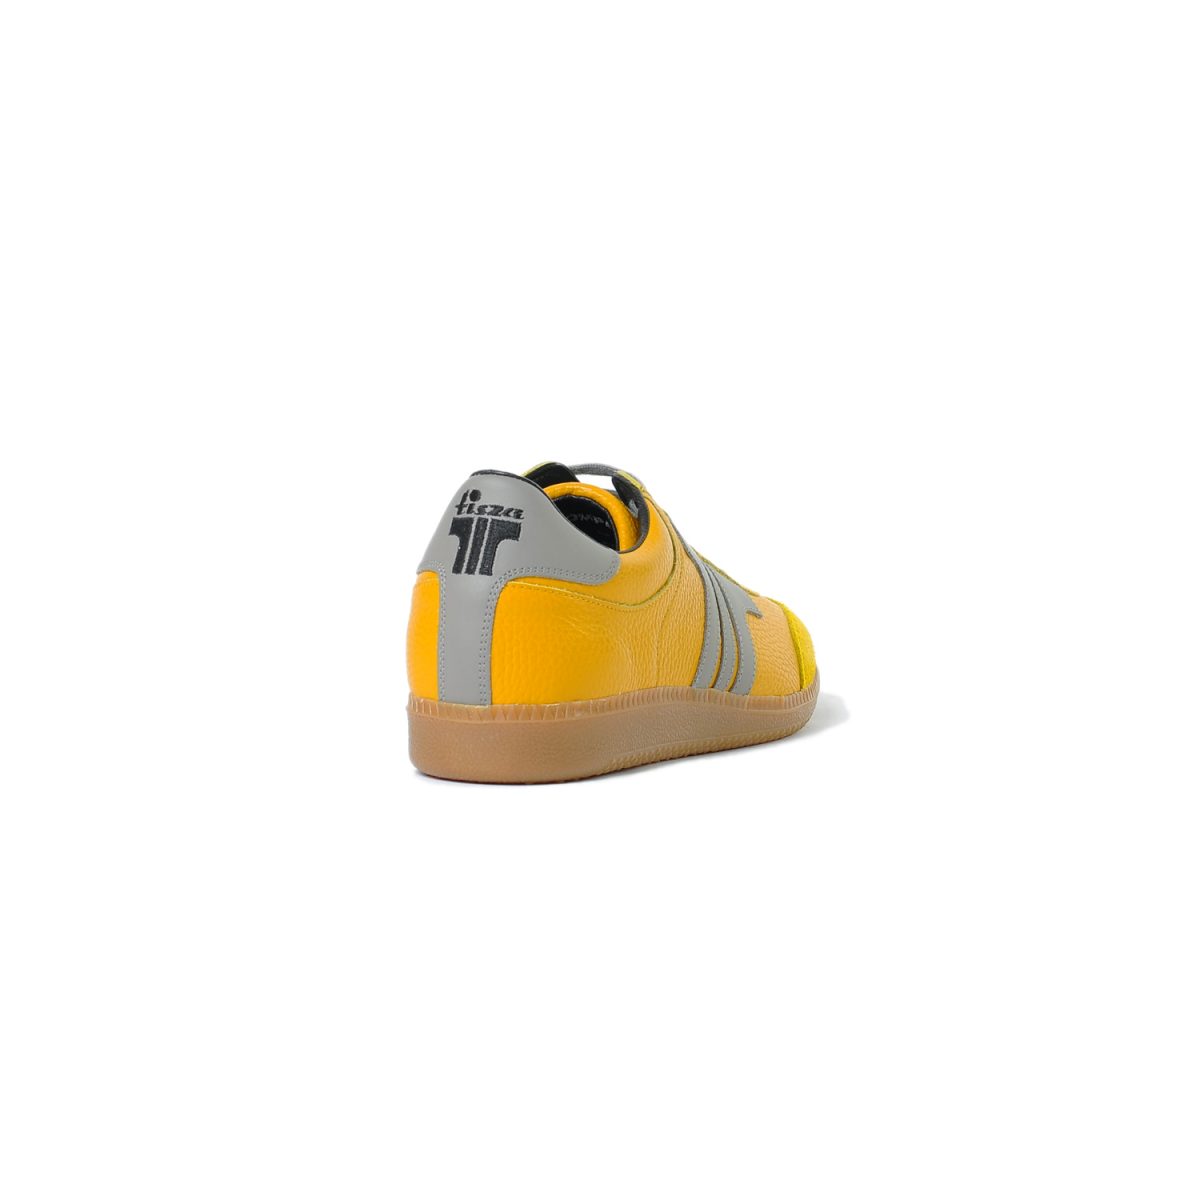 Tisza shoes - Compakt - Mustard